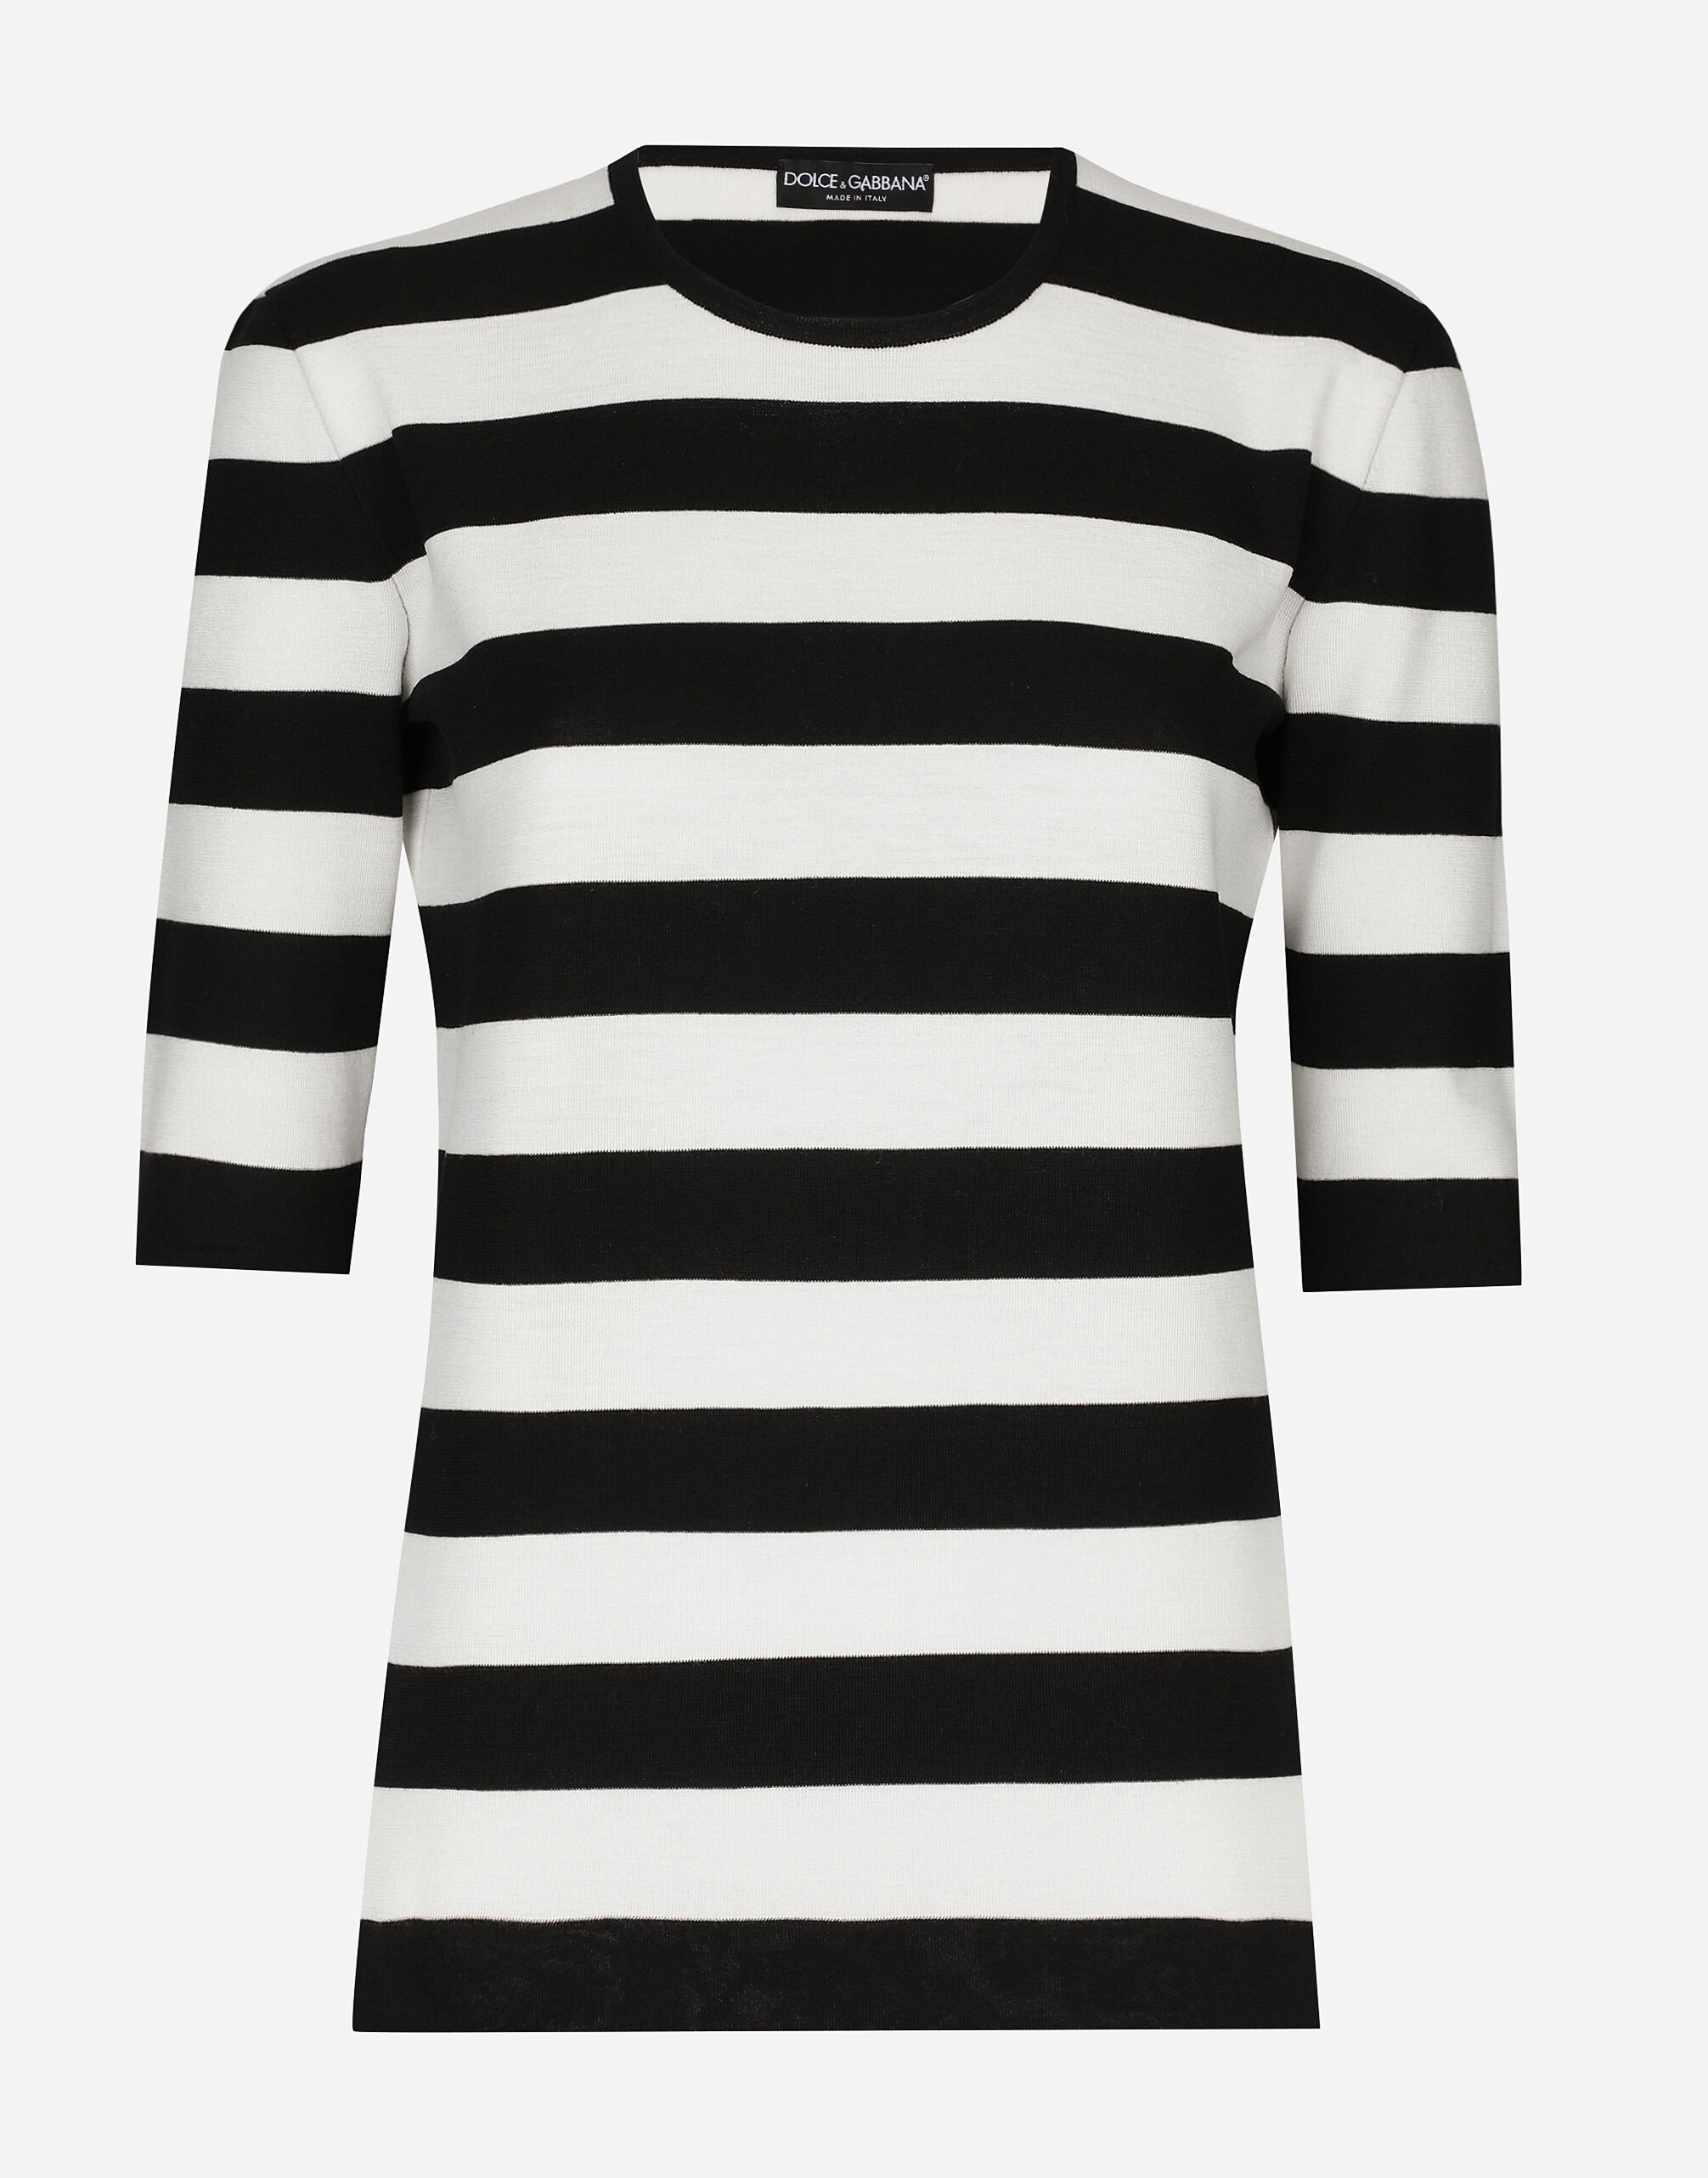 Dolce & Gabbana Wool sweater in inlaid stripes Print FXV07TJAHKG